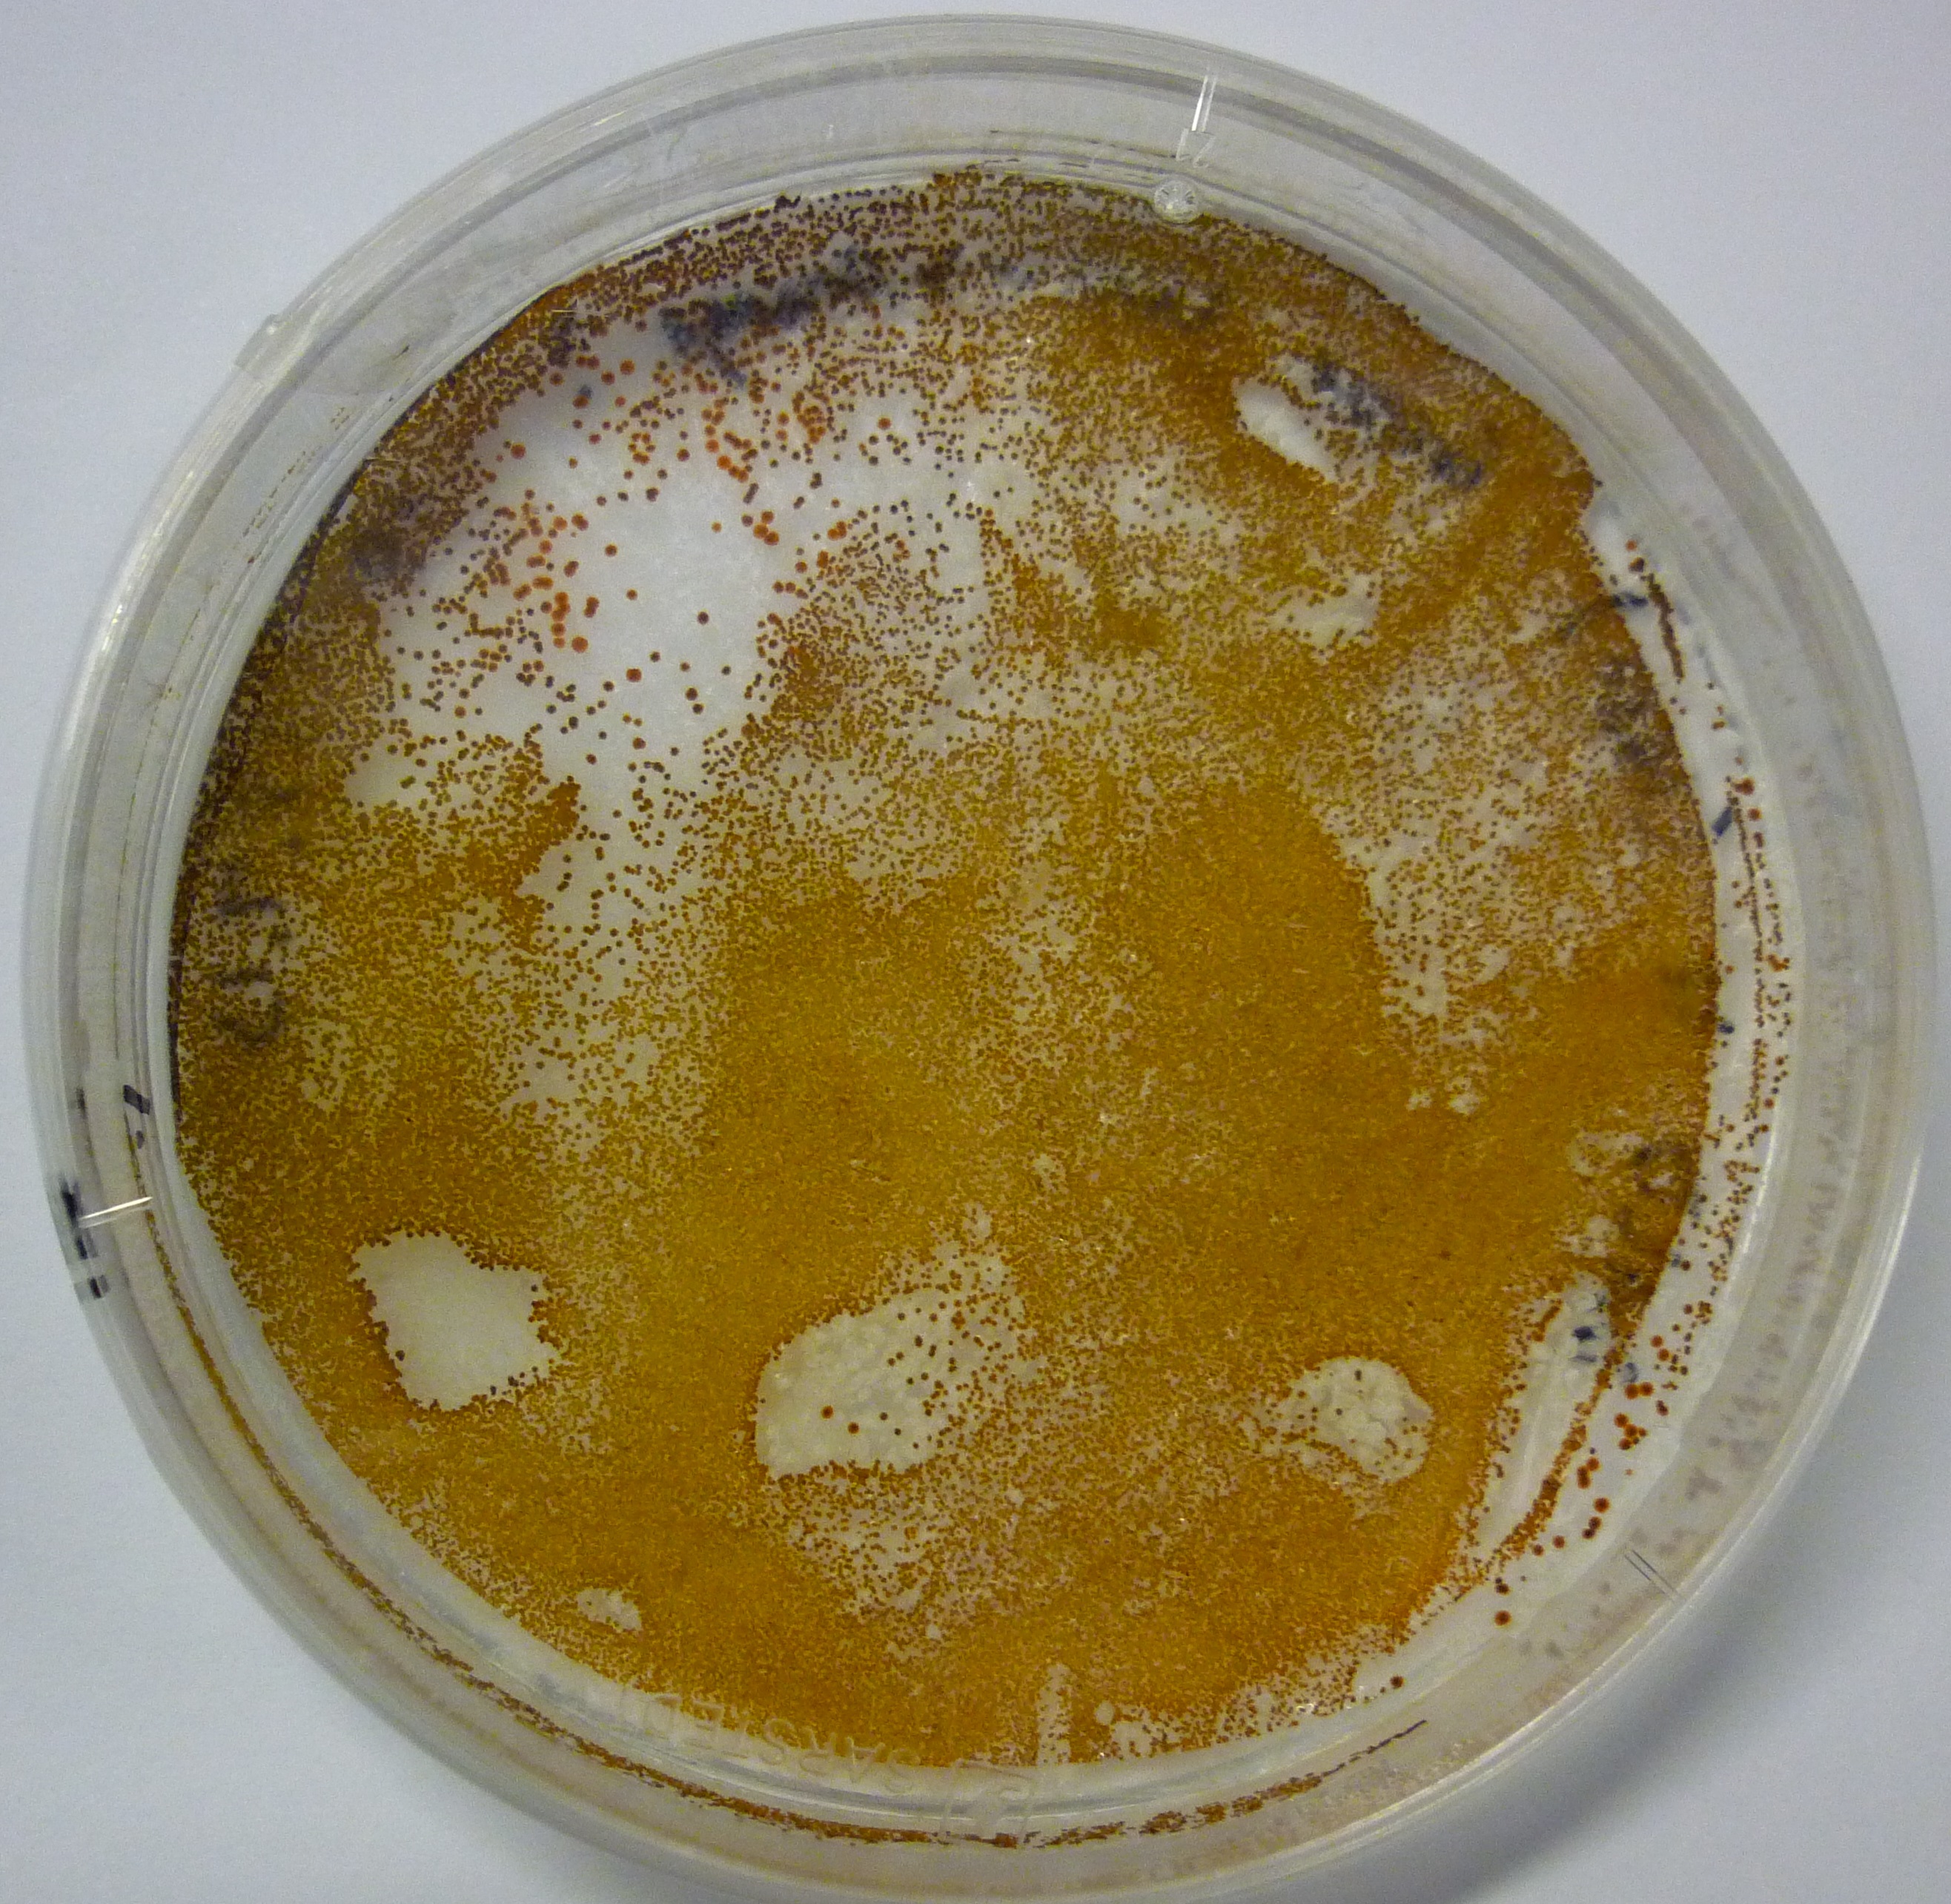 Plate showing lutein producing marine microalga